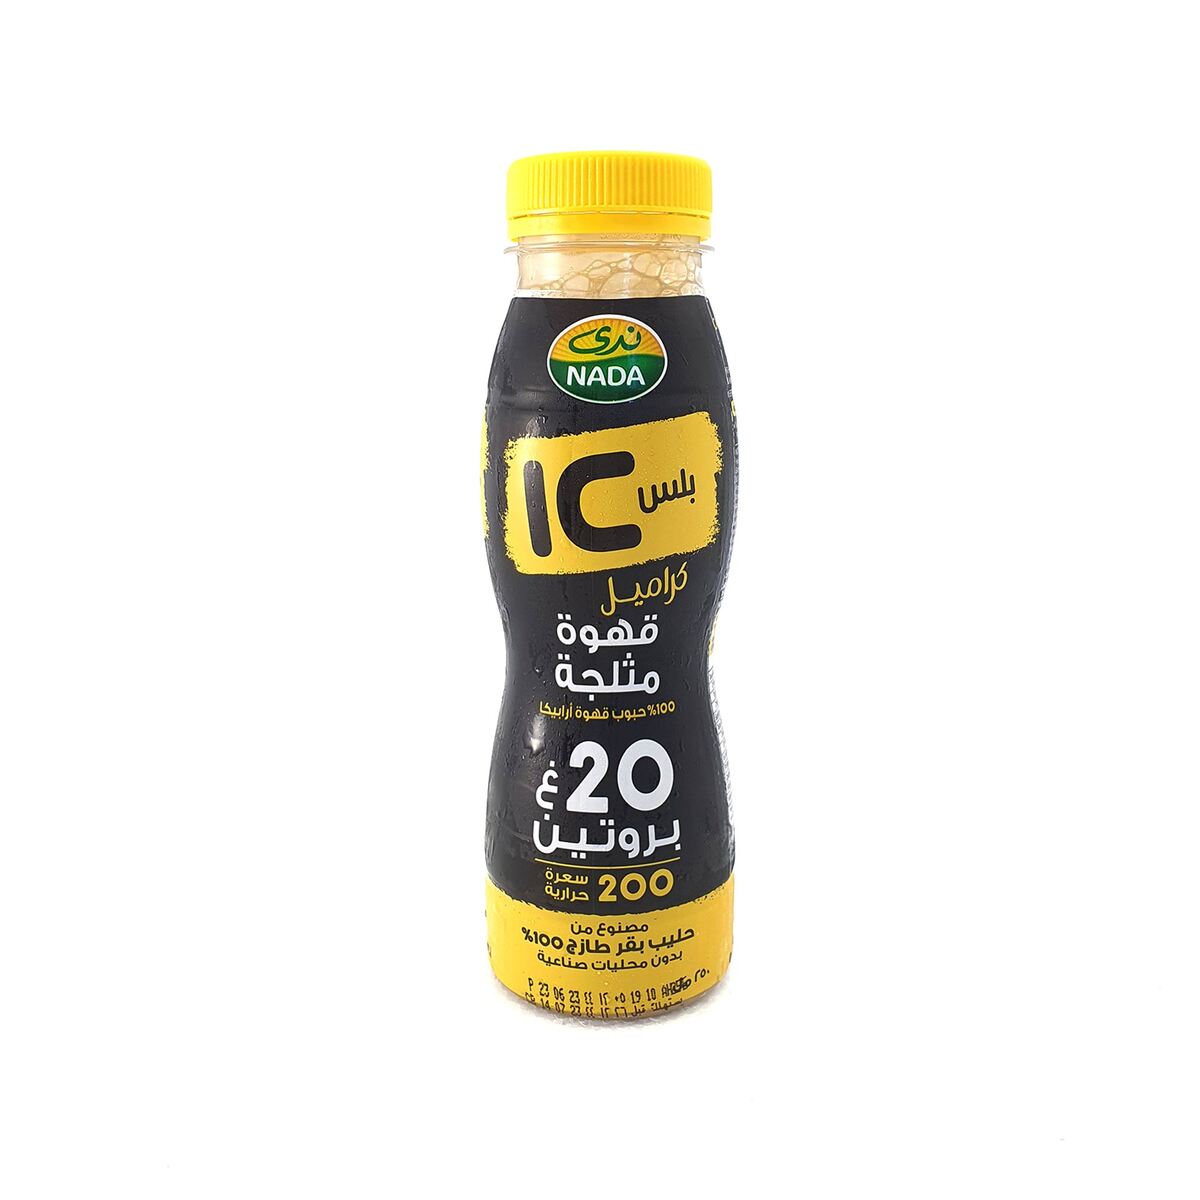 Nada IC Plus Caramel Iced Coffee, 250 ml